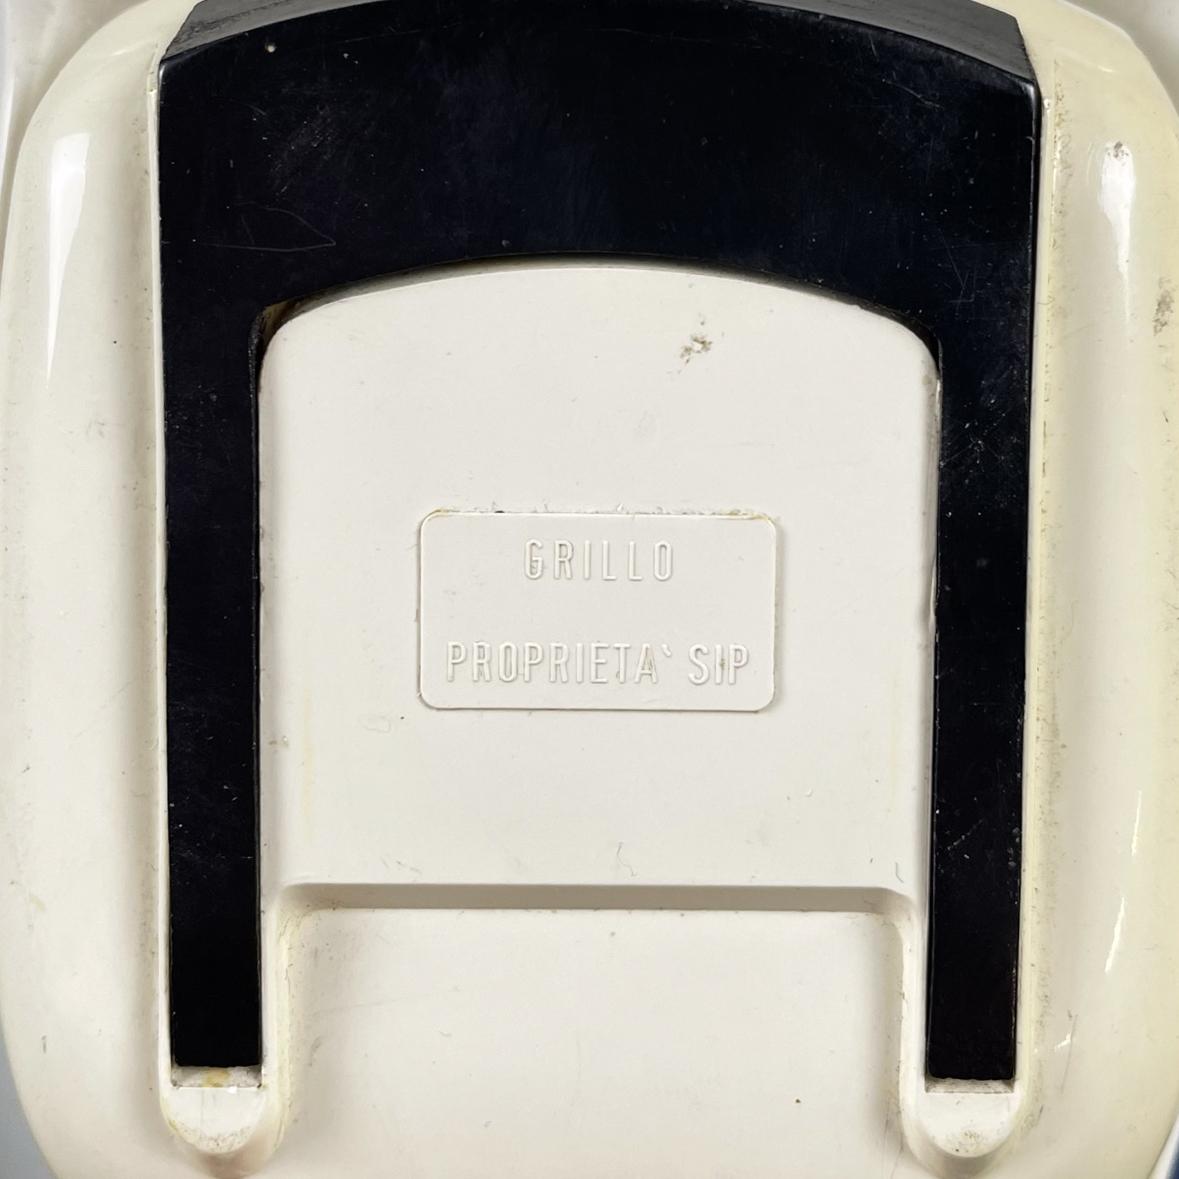 German Modern White Telephone Mod. Grillo by Zanuso Sapper for Siemens, 1960s For Sale 2